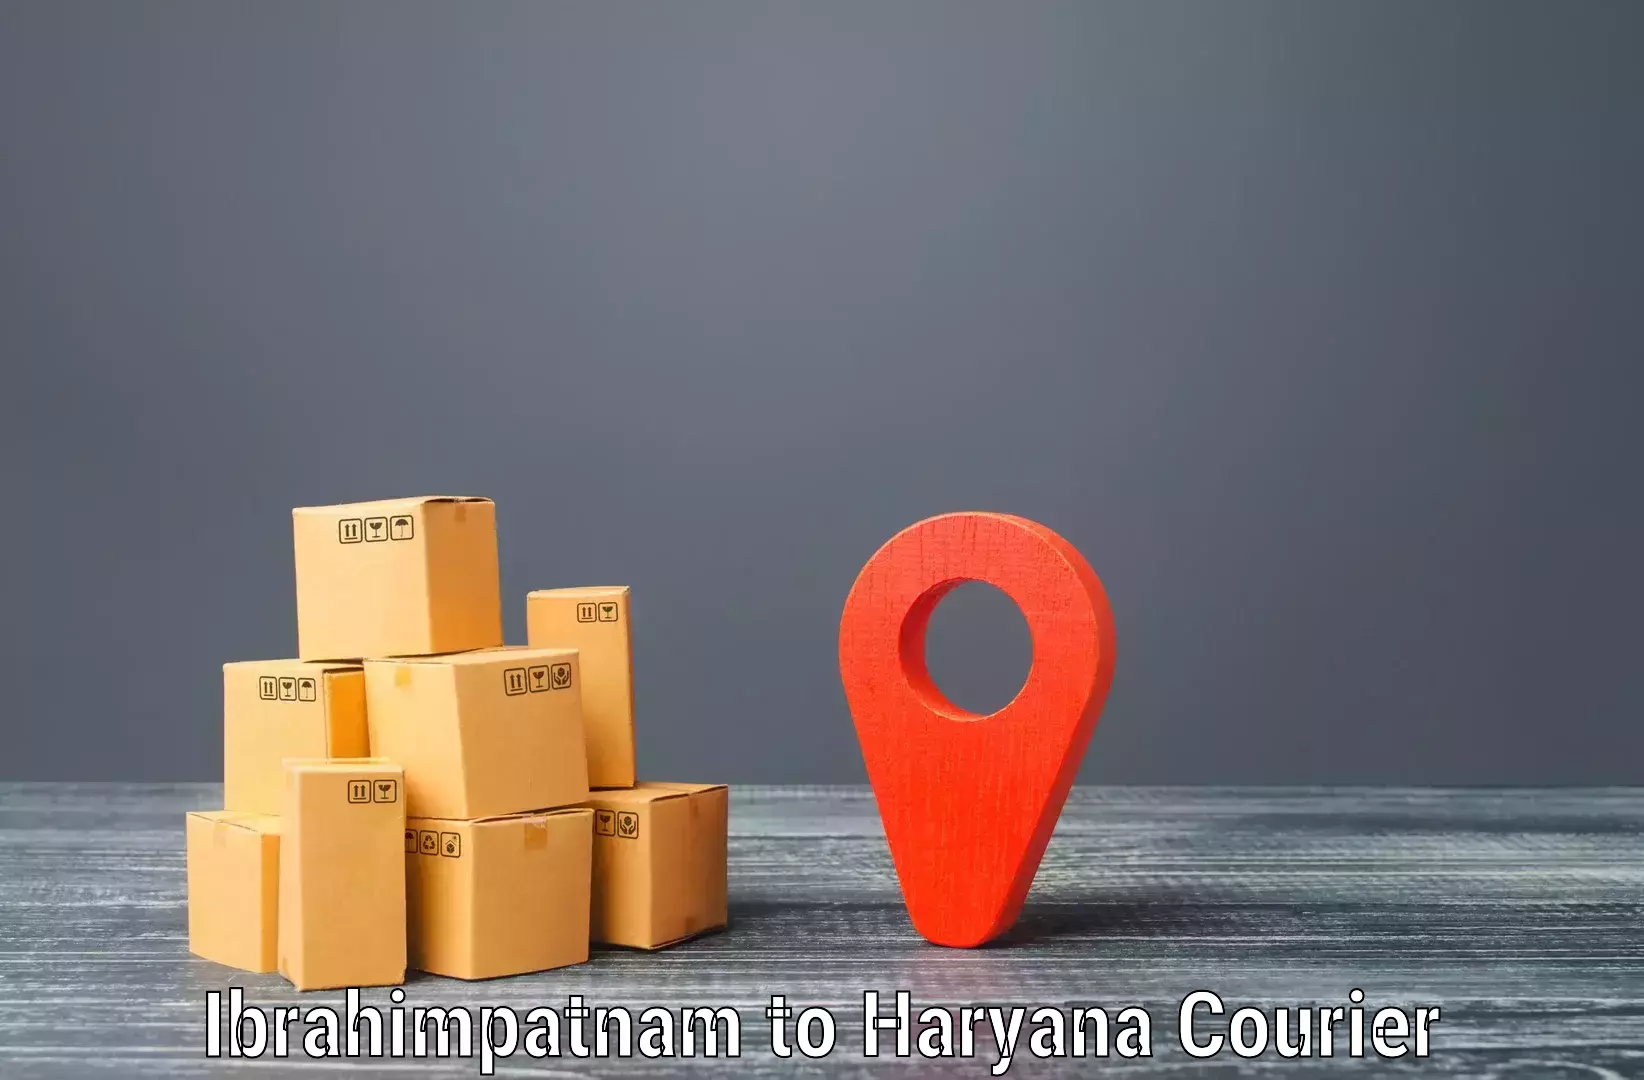 Courier service comparison in Ibrahimpatnam to Panchkula